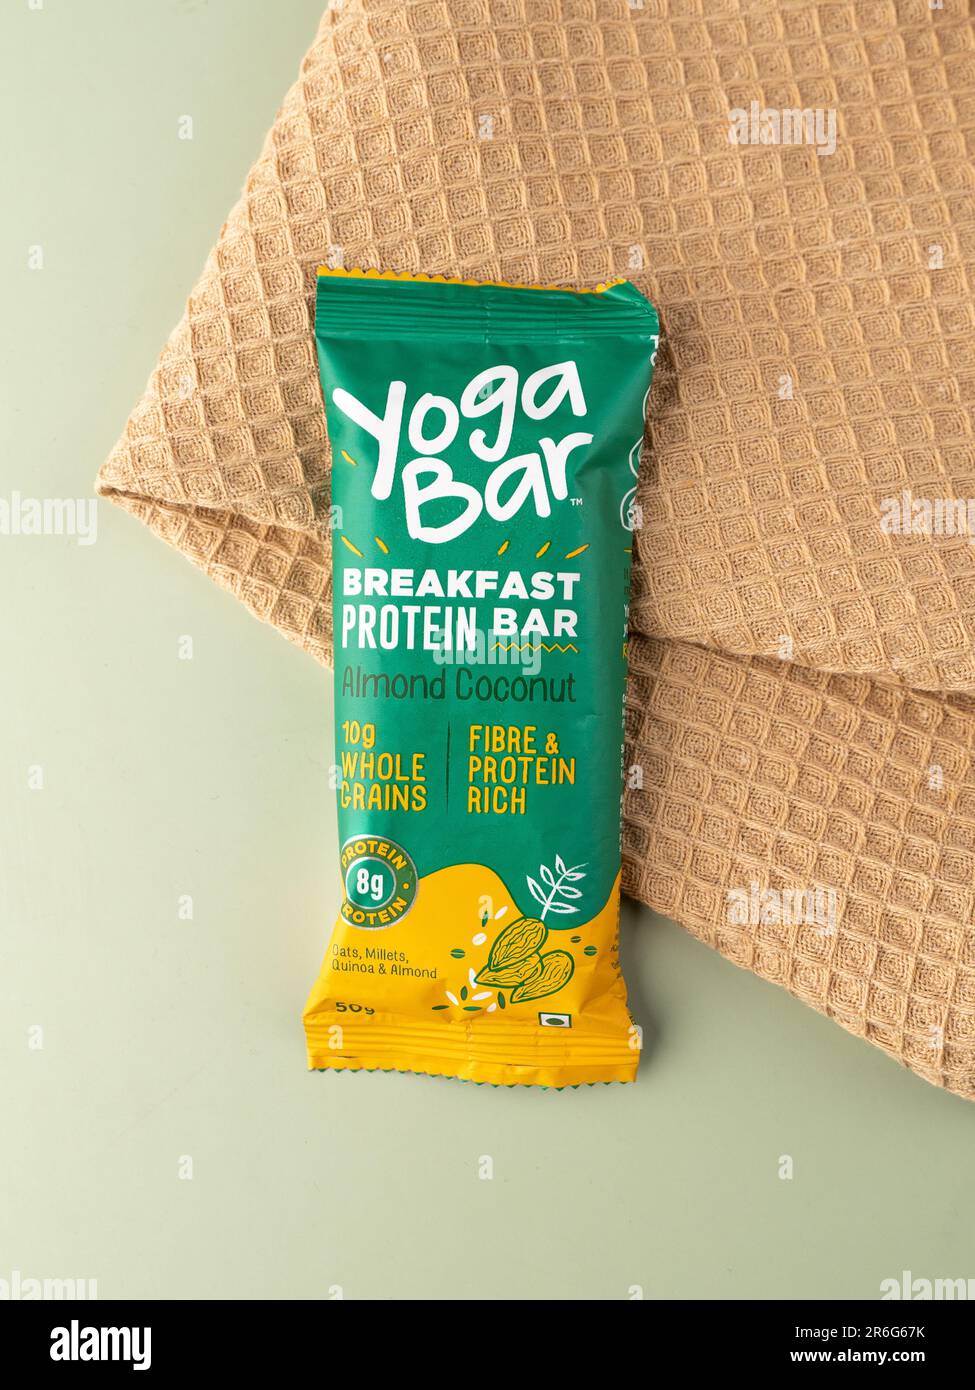 Yoga Bar Breakfast Protein Bar for Nutrition